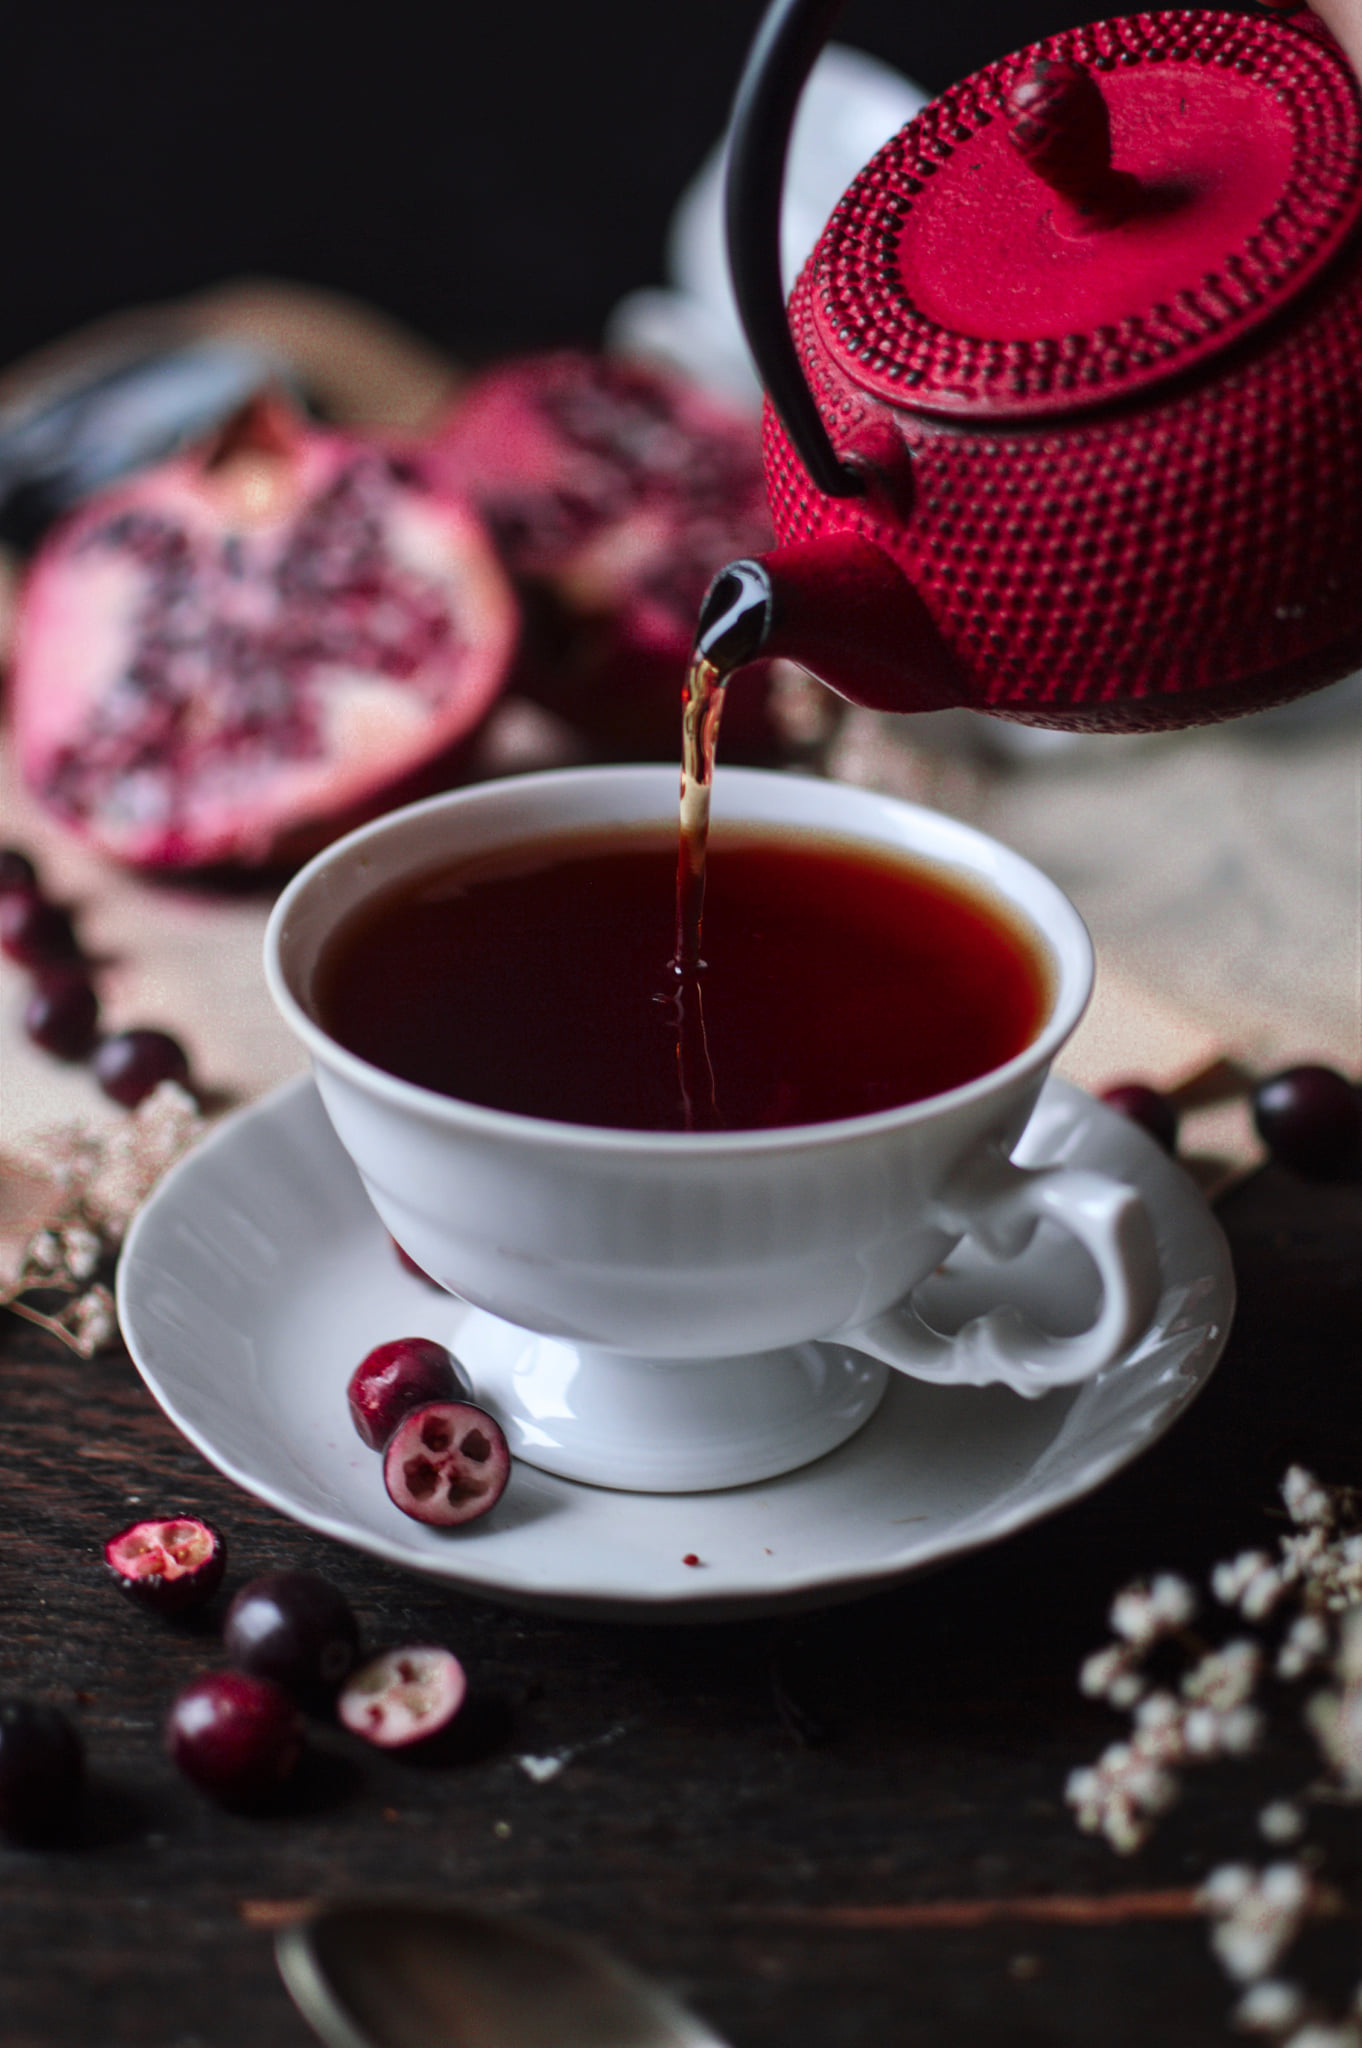 KRÓLEWNA ŚNIEŻKA PREZENT HERBATA herbata z granatem czarna herbata